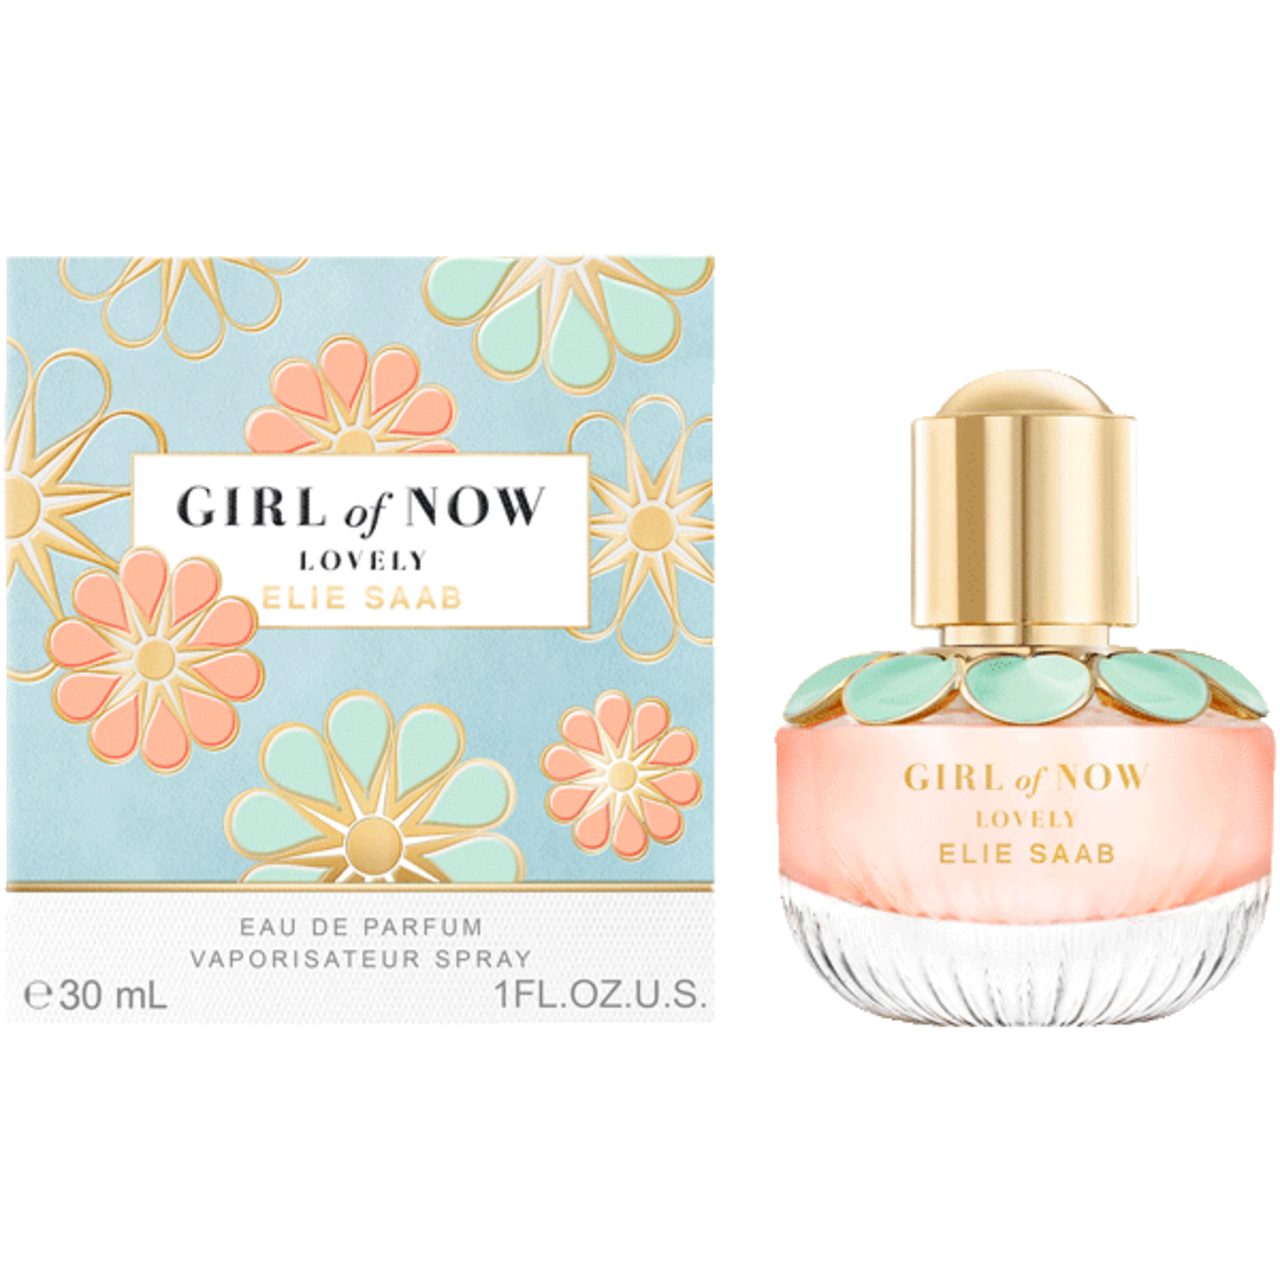 ELIE SAAB Eau de Parfum Girl of Now Lovely E.d.P. Nat. Spray